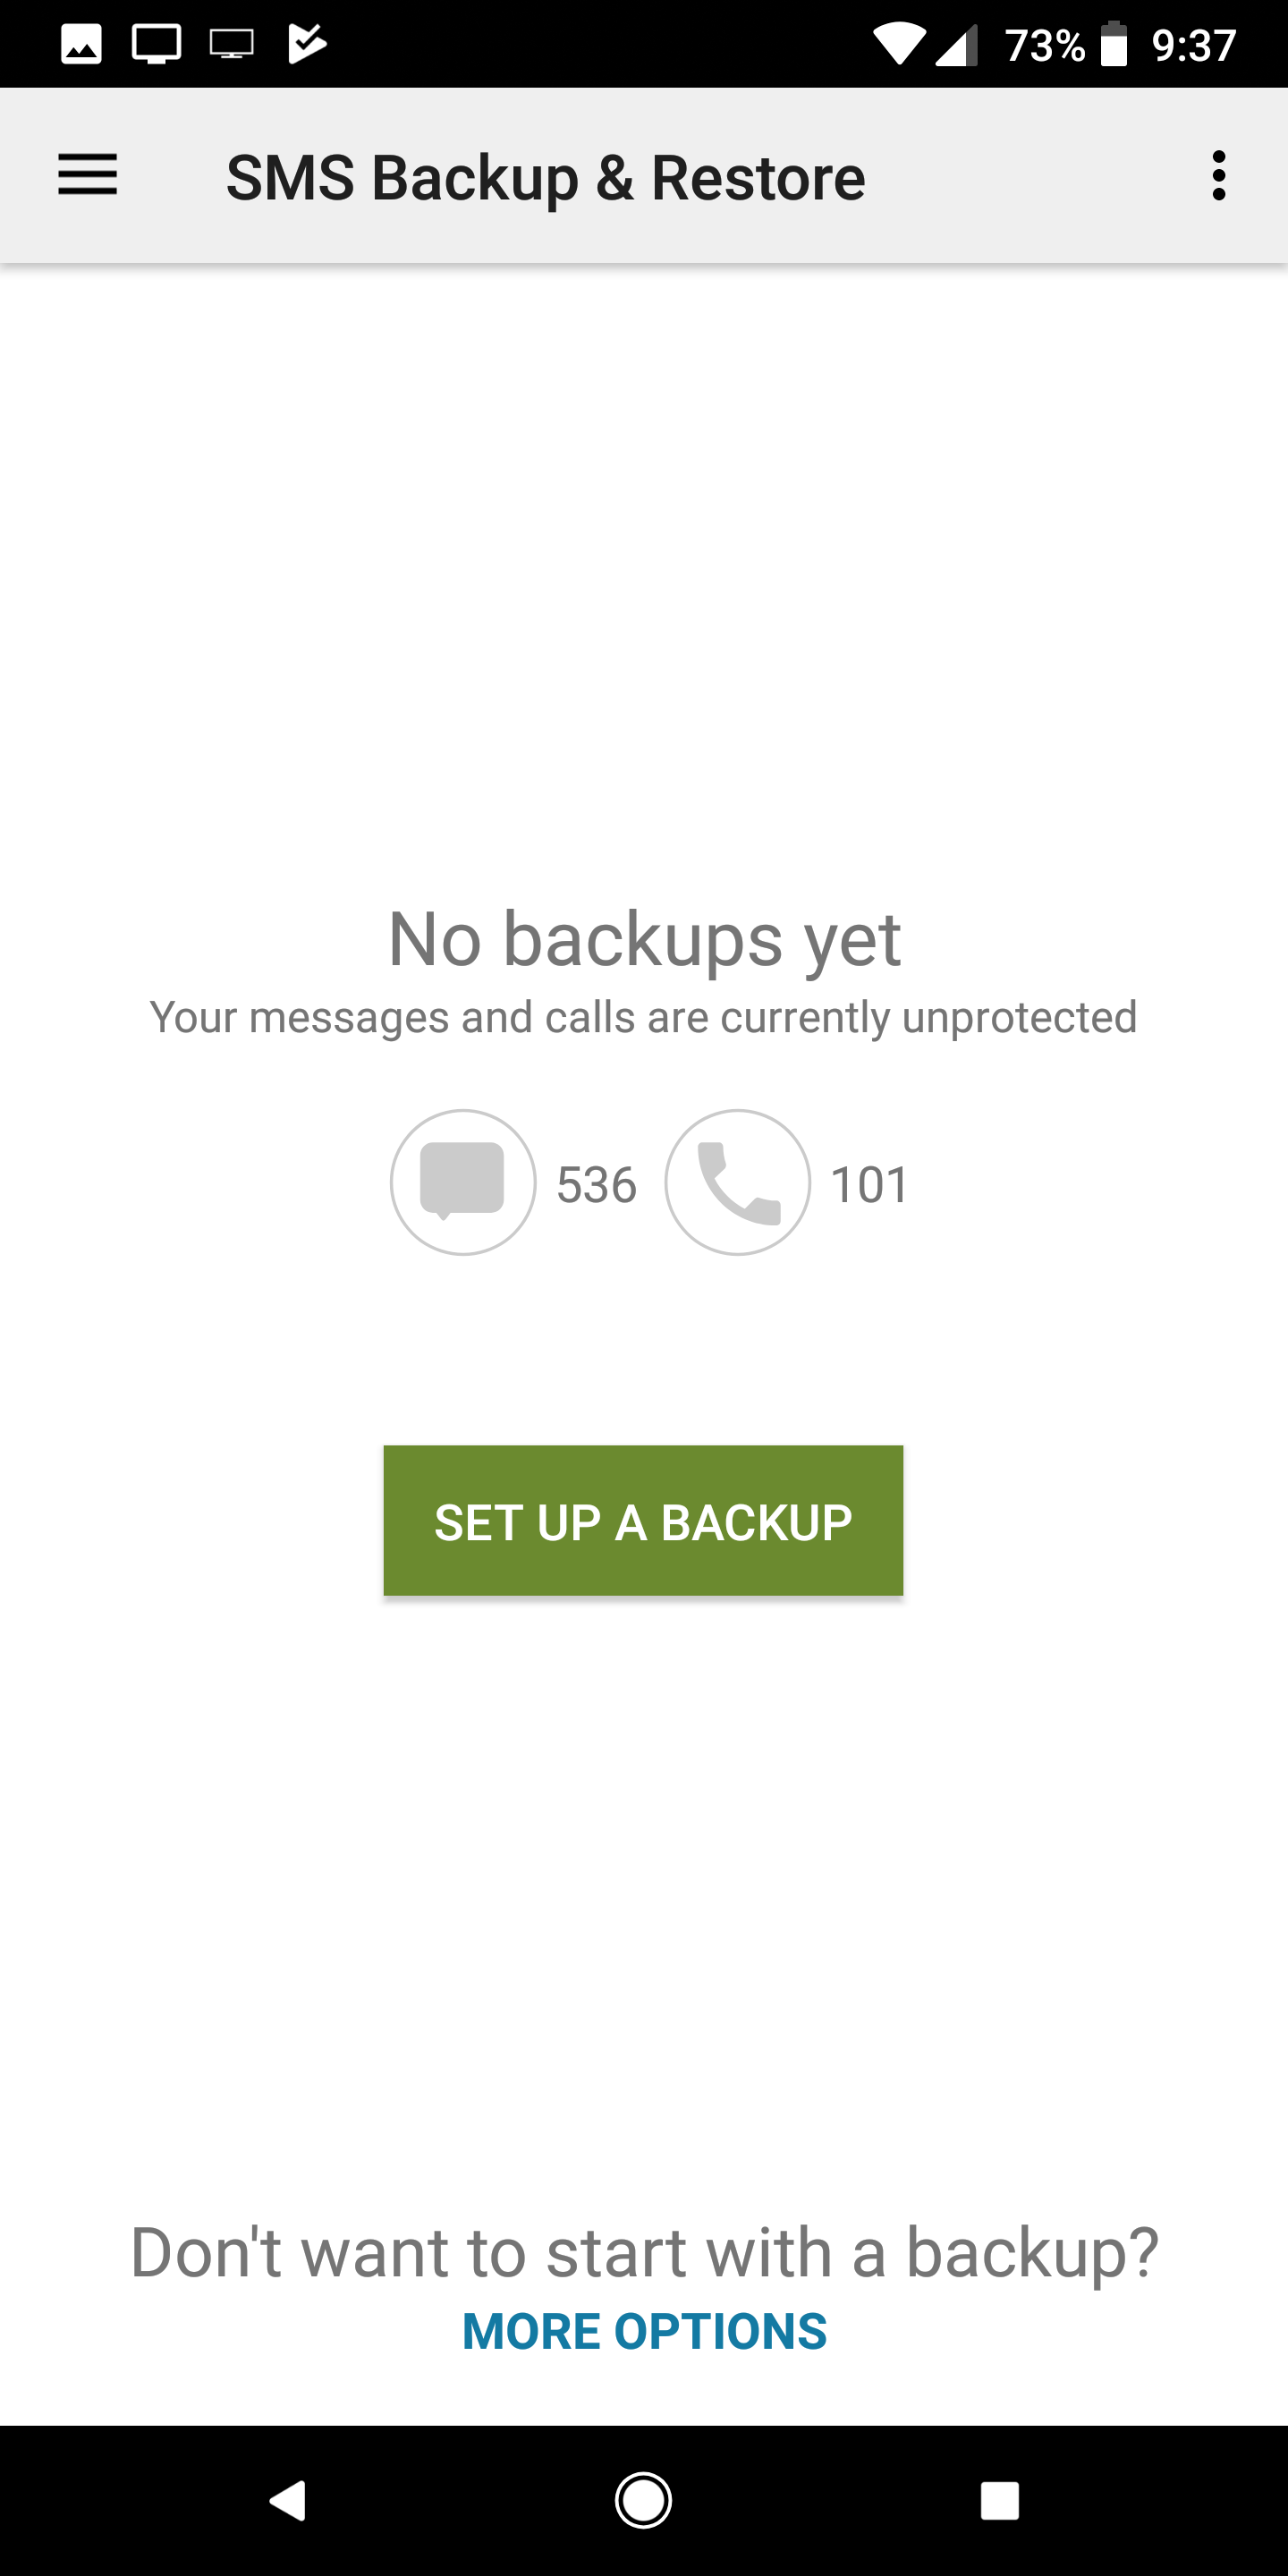 Screenshot shows the 'SET UP A BACKUP' option in SMS Backup & Restore.